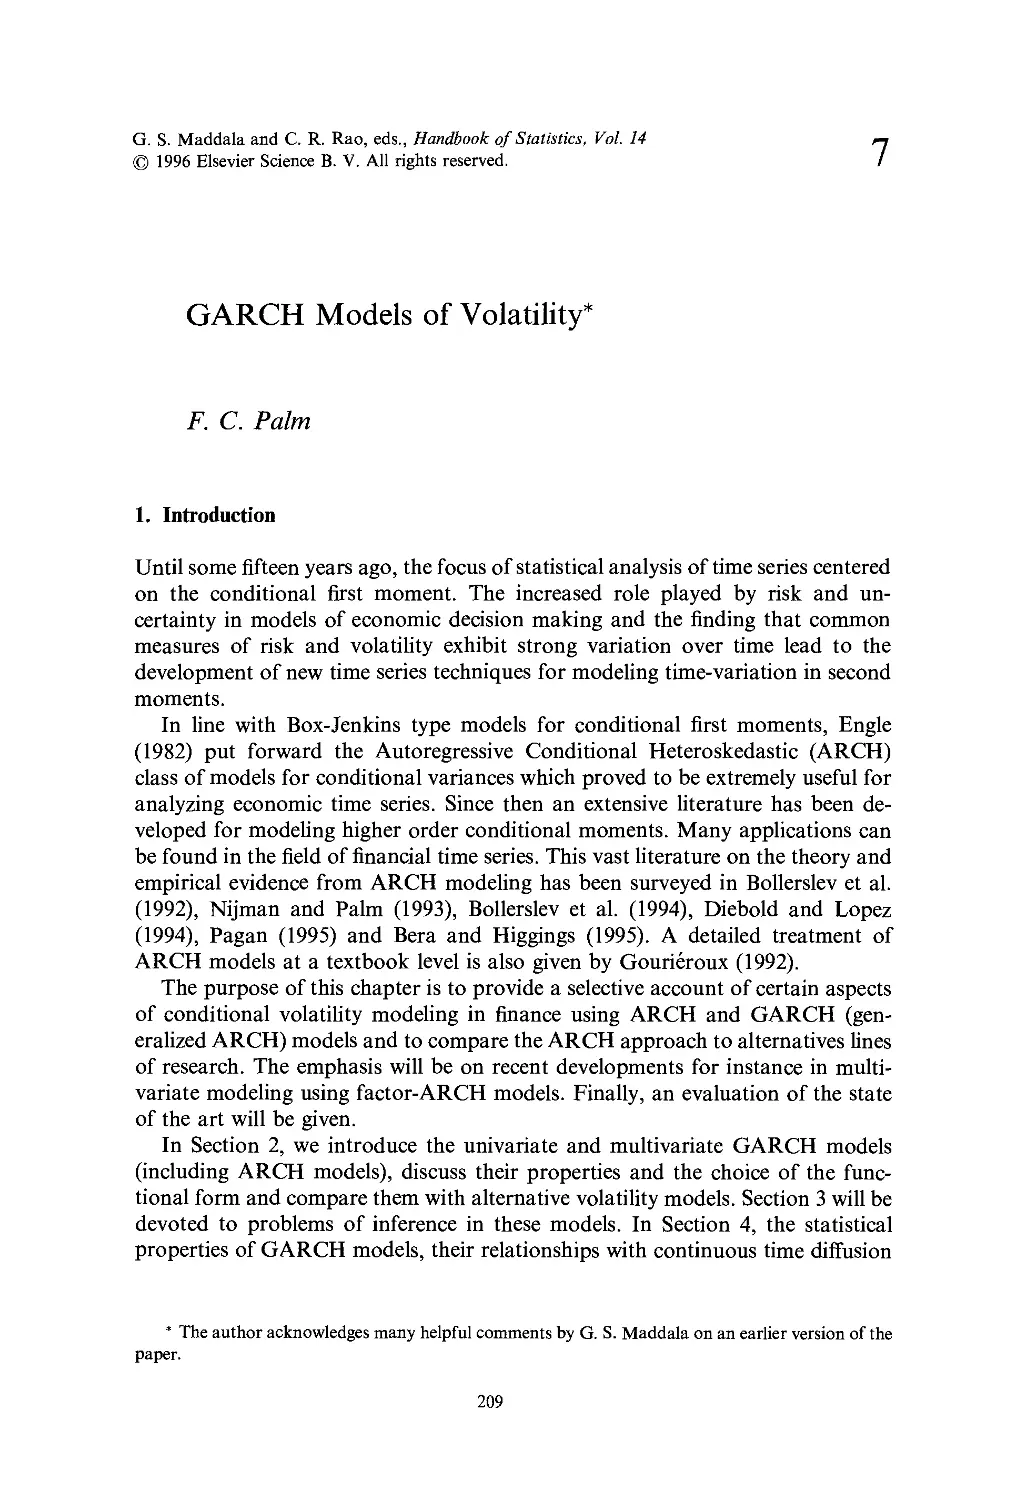 7. GARCH Models of Volatility